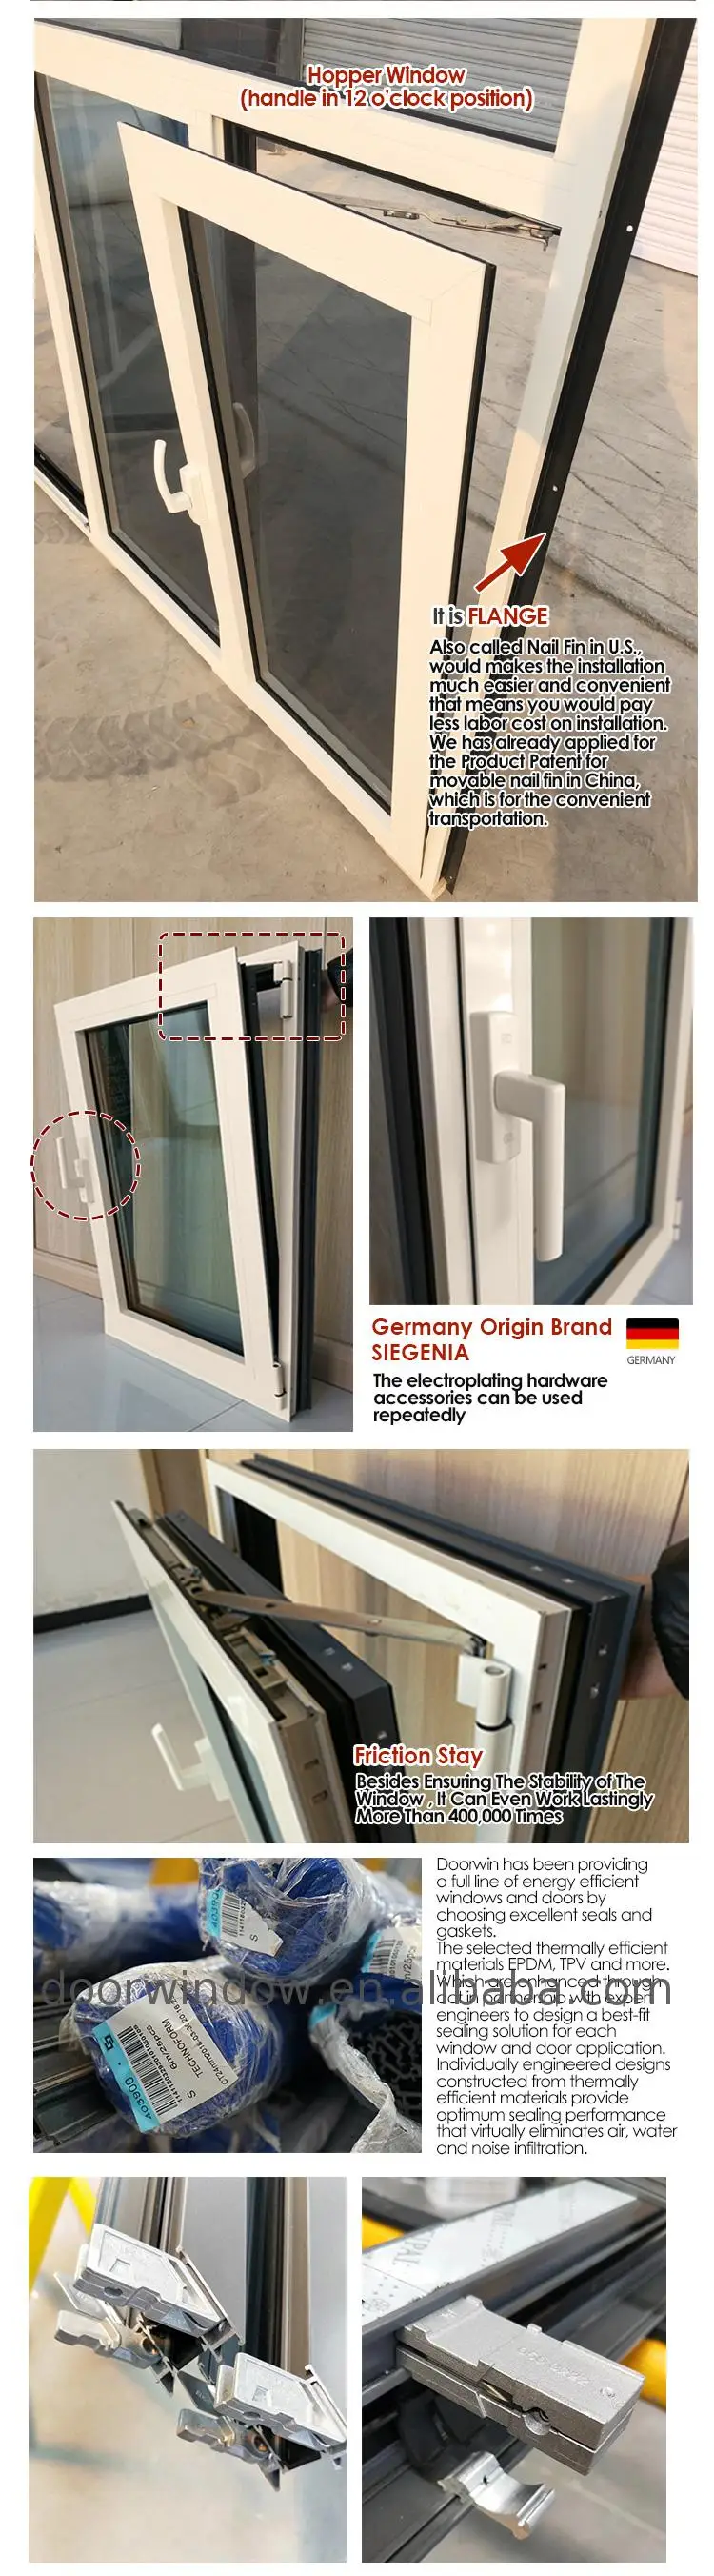 Thermal break aluminum window opening 180 degree casement windows new design